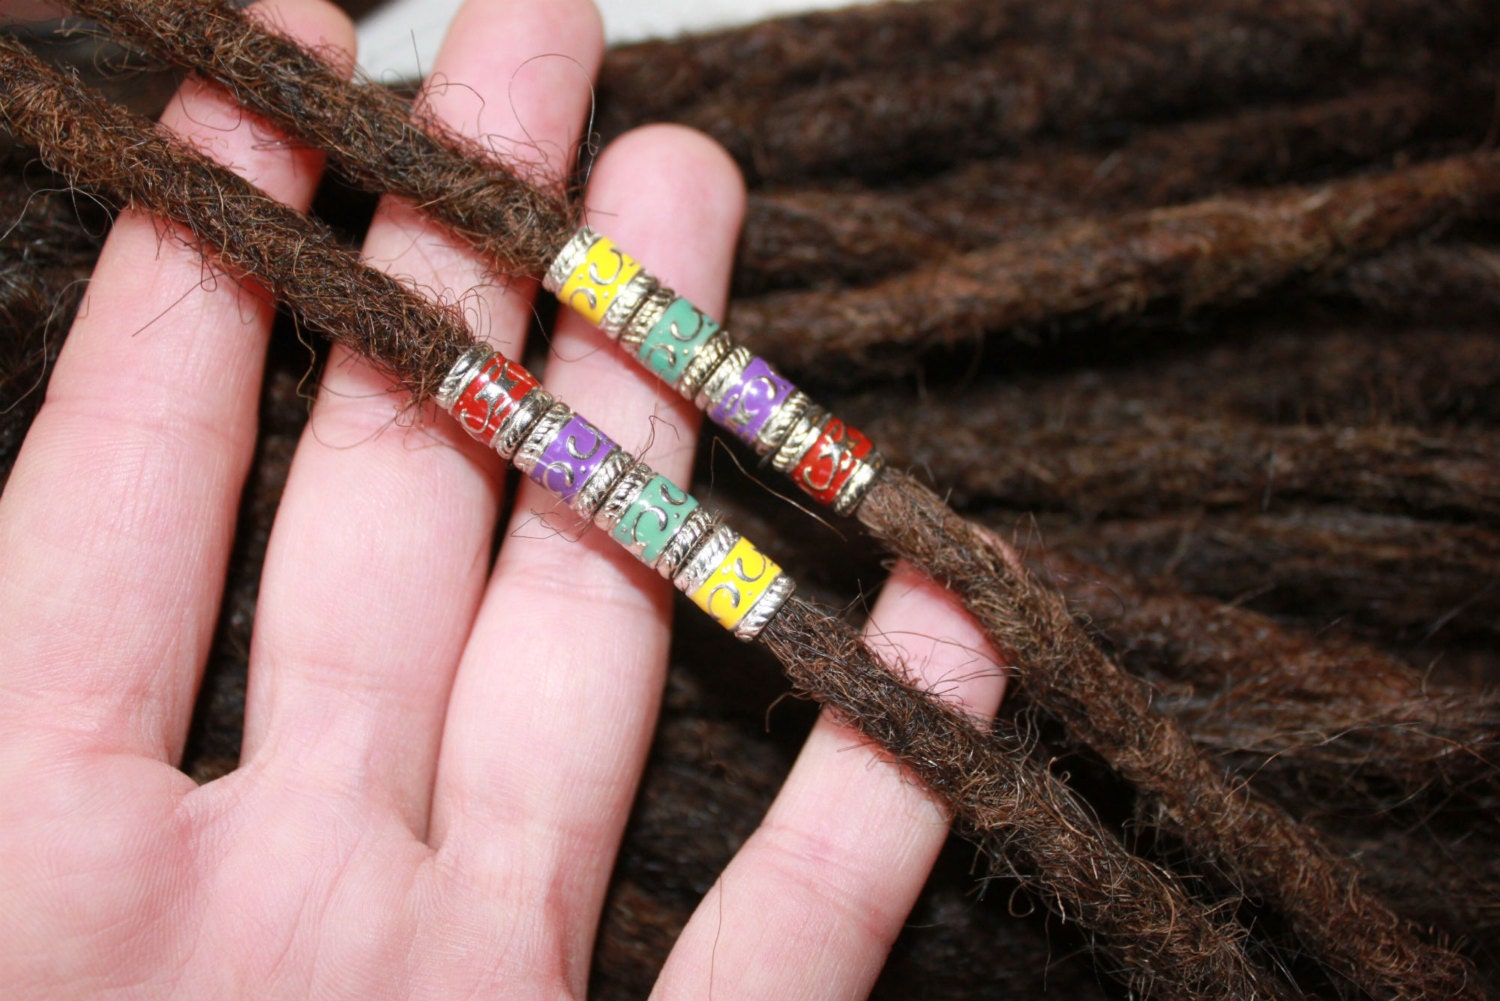 8 tiny dread beads beads for dreadlocks dreadlock